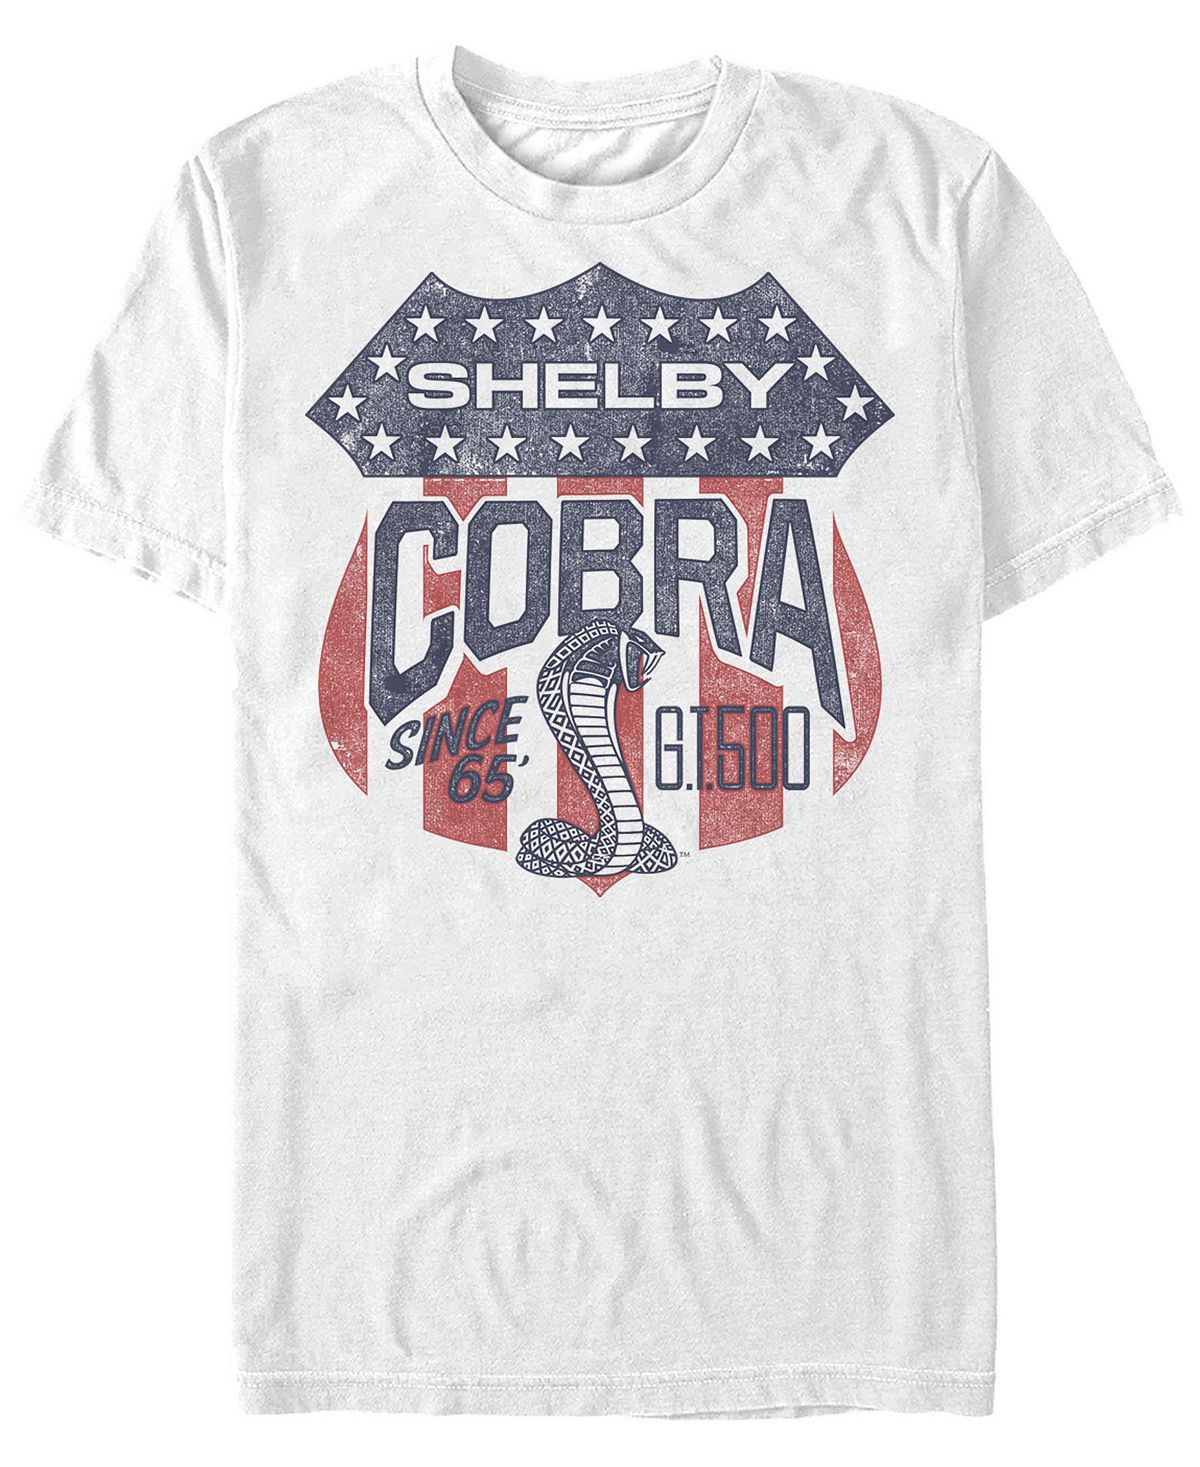 Мужская футболка с коротким рукавом shelby cobra american cobra Fifth Sun, белый